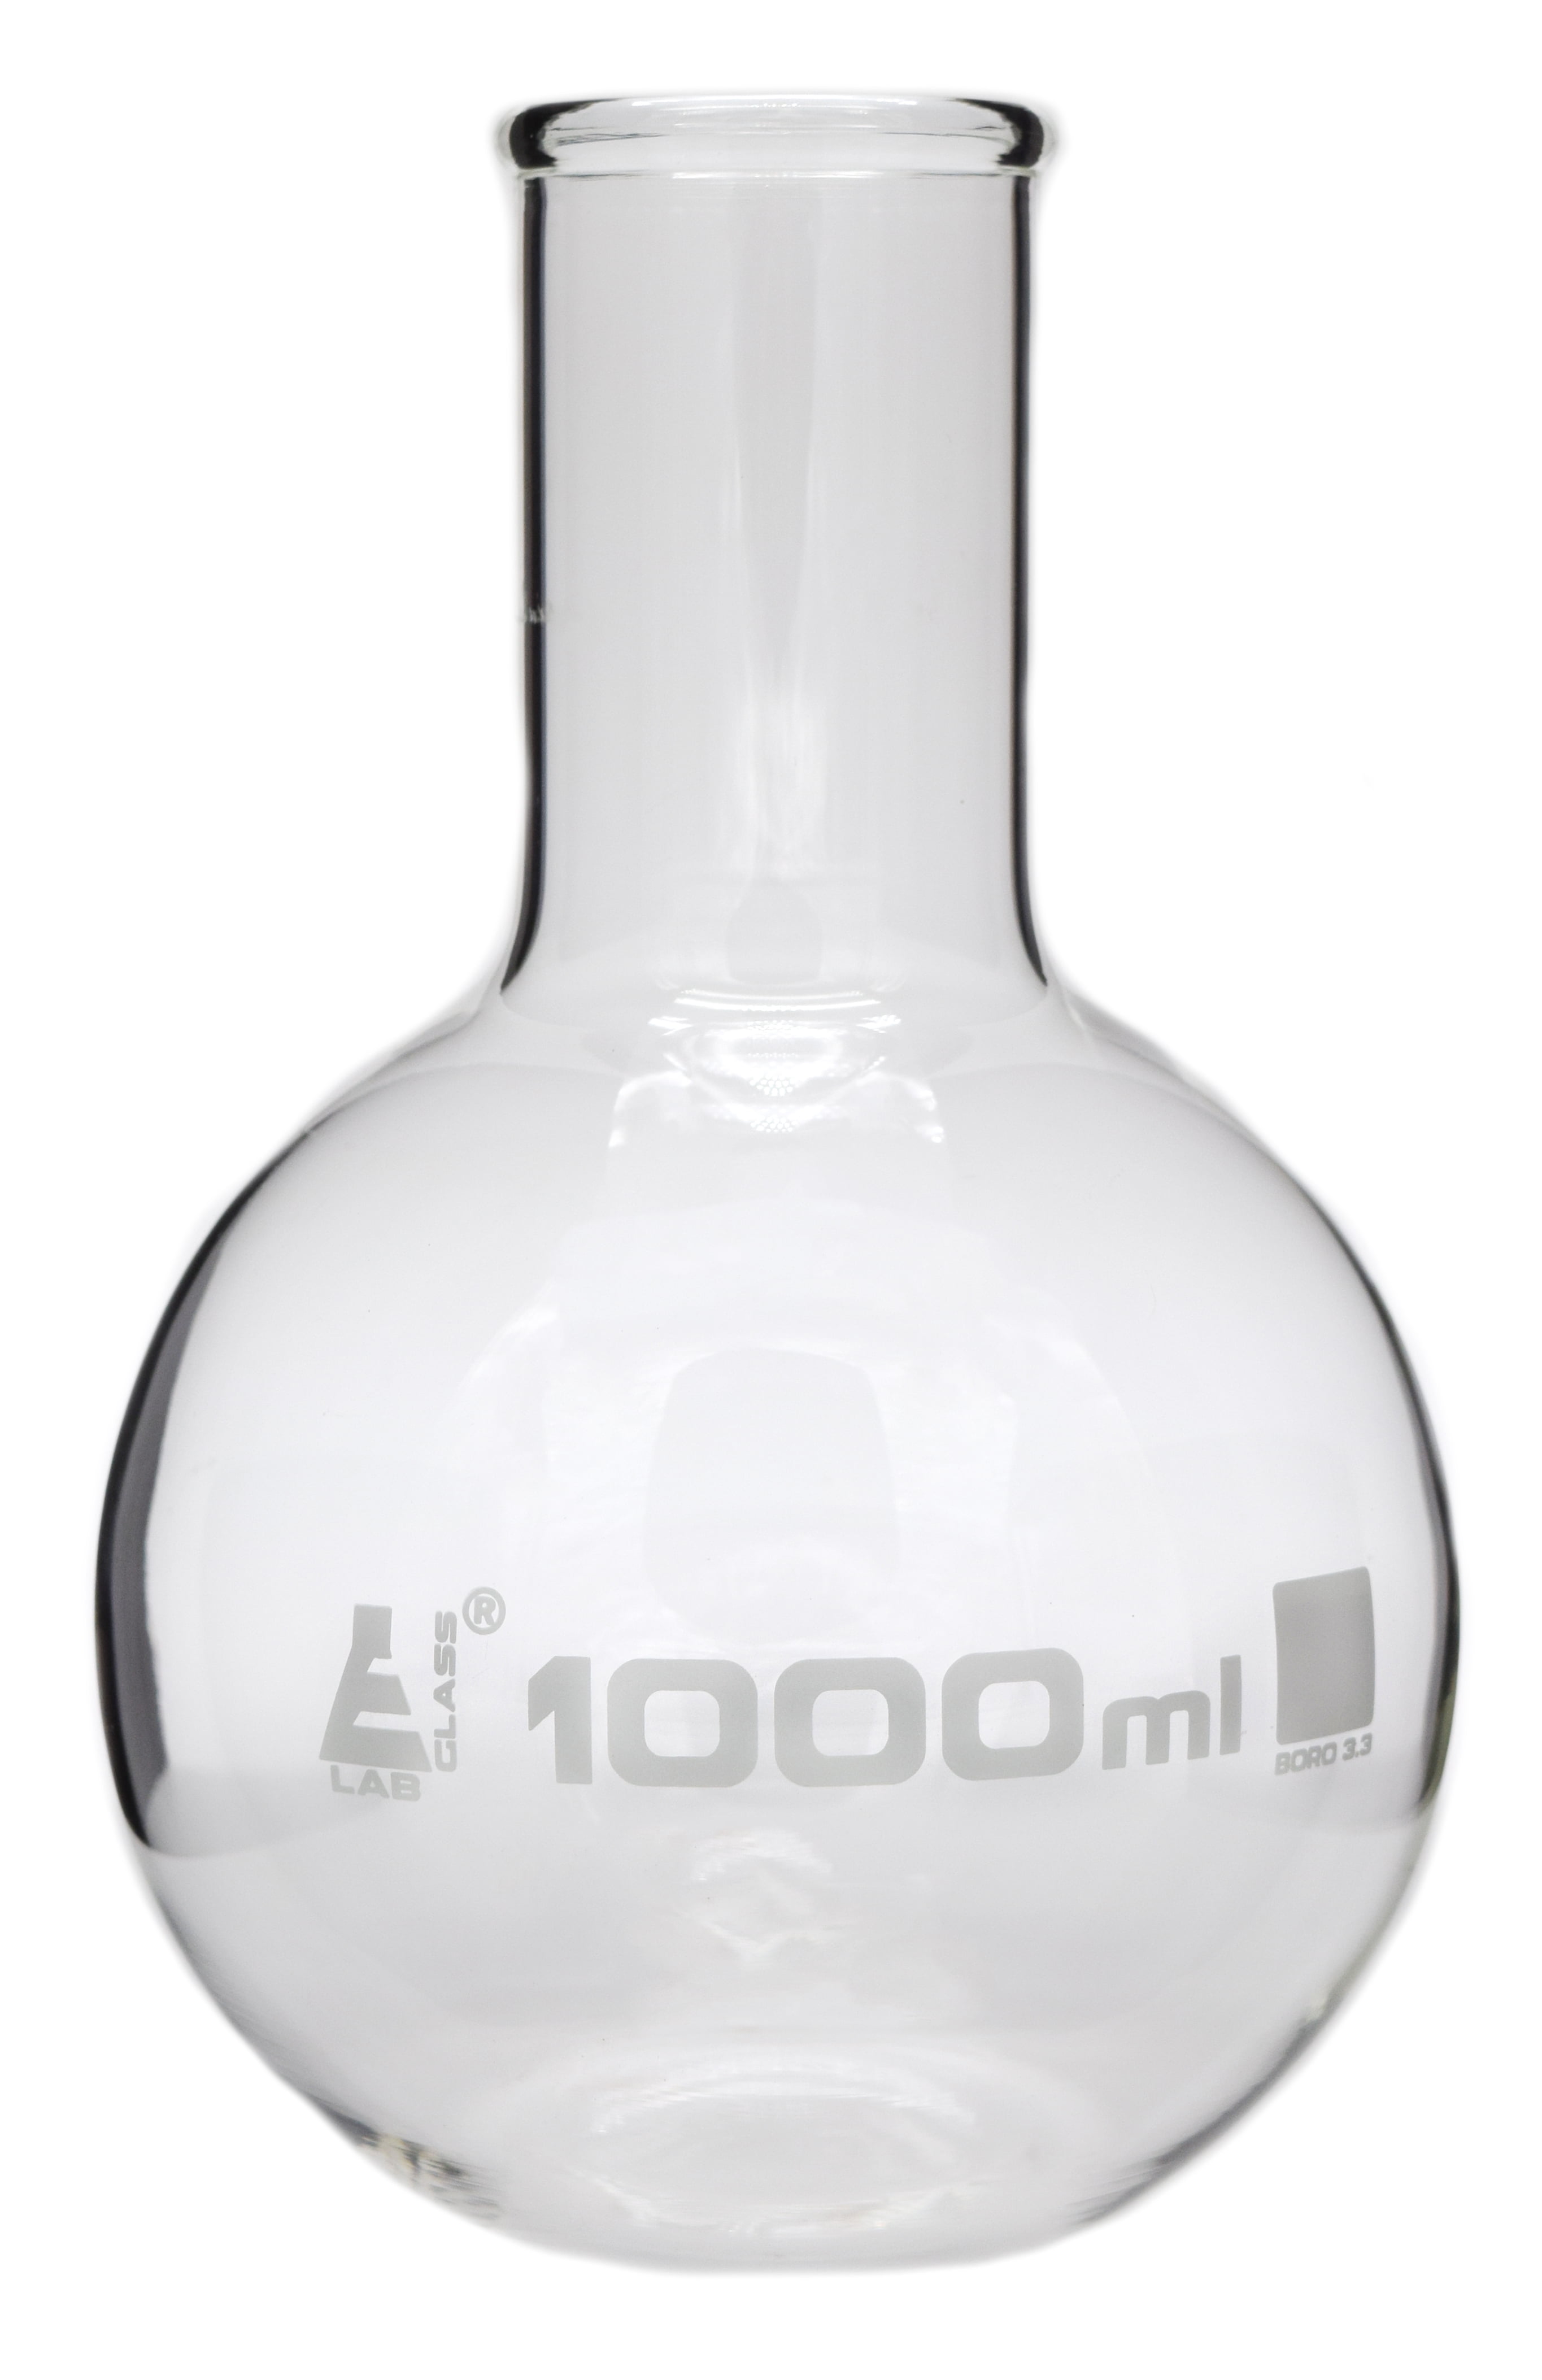 Pyrex™ Borosilicate Glass Narrow Neck Flat Bottom Boiling Flask